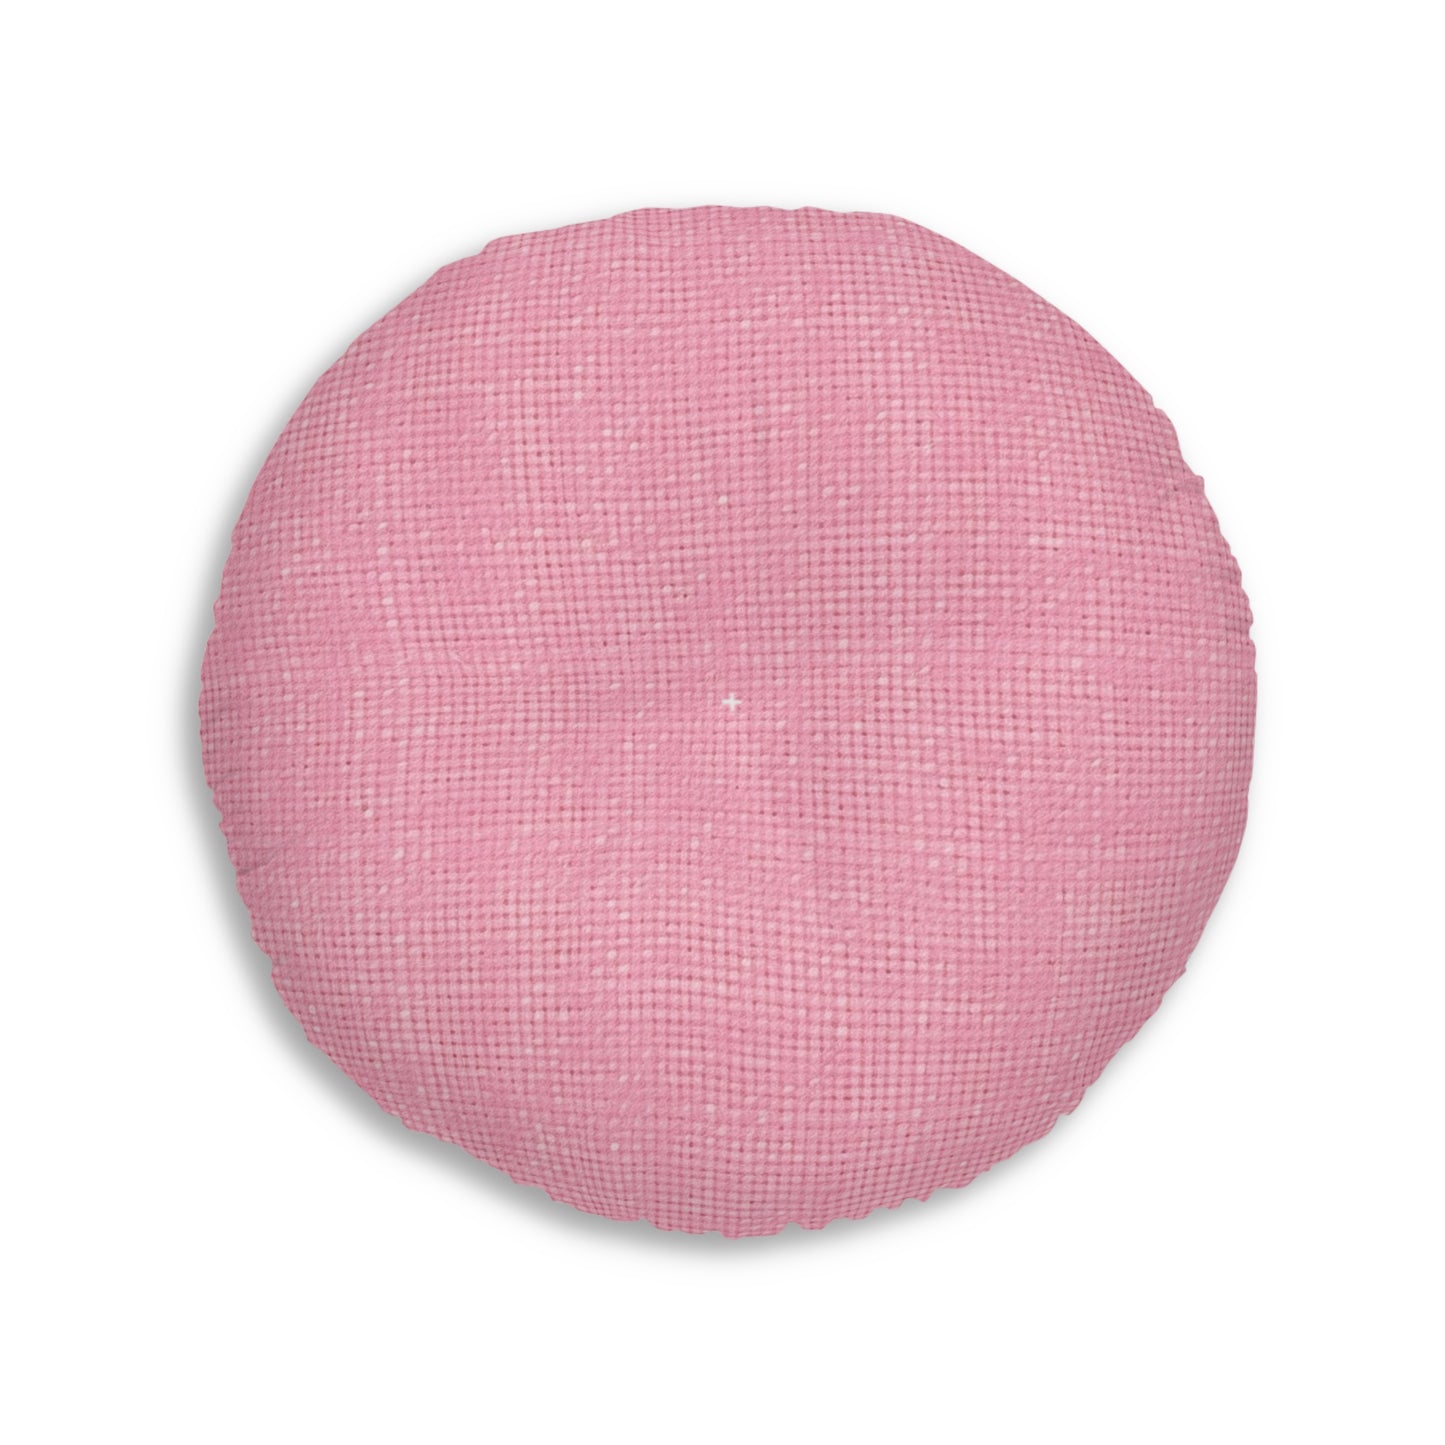 Pastel Rose Pink: Denim-Inspired, Refreshing Fabric Design - Tufted Floor Pillow, Round